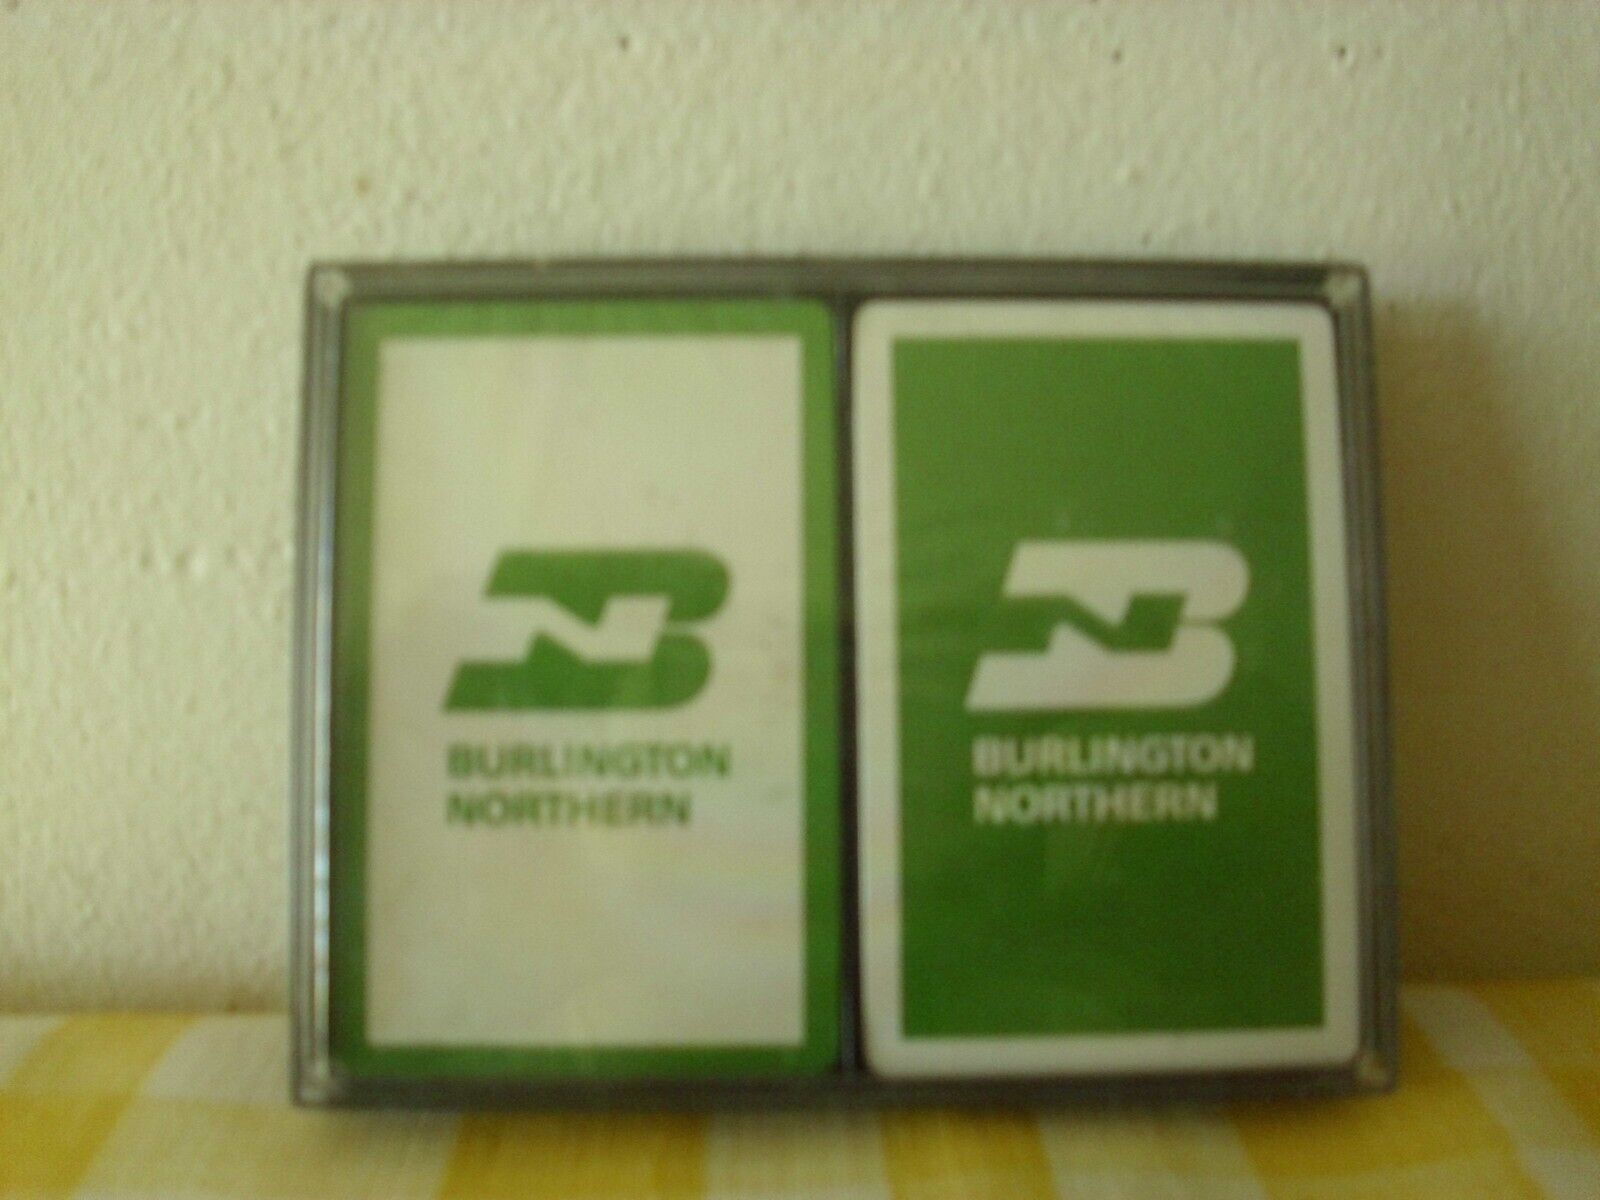 Burlington Northern Set of 2 Decks of Cards - Original Box - NEW, unopened cards